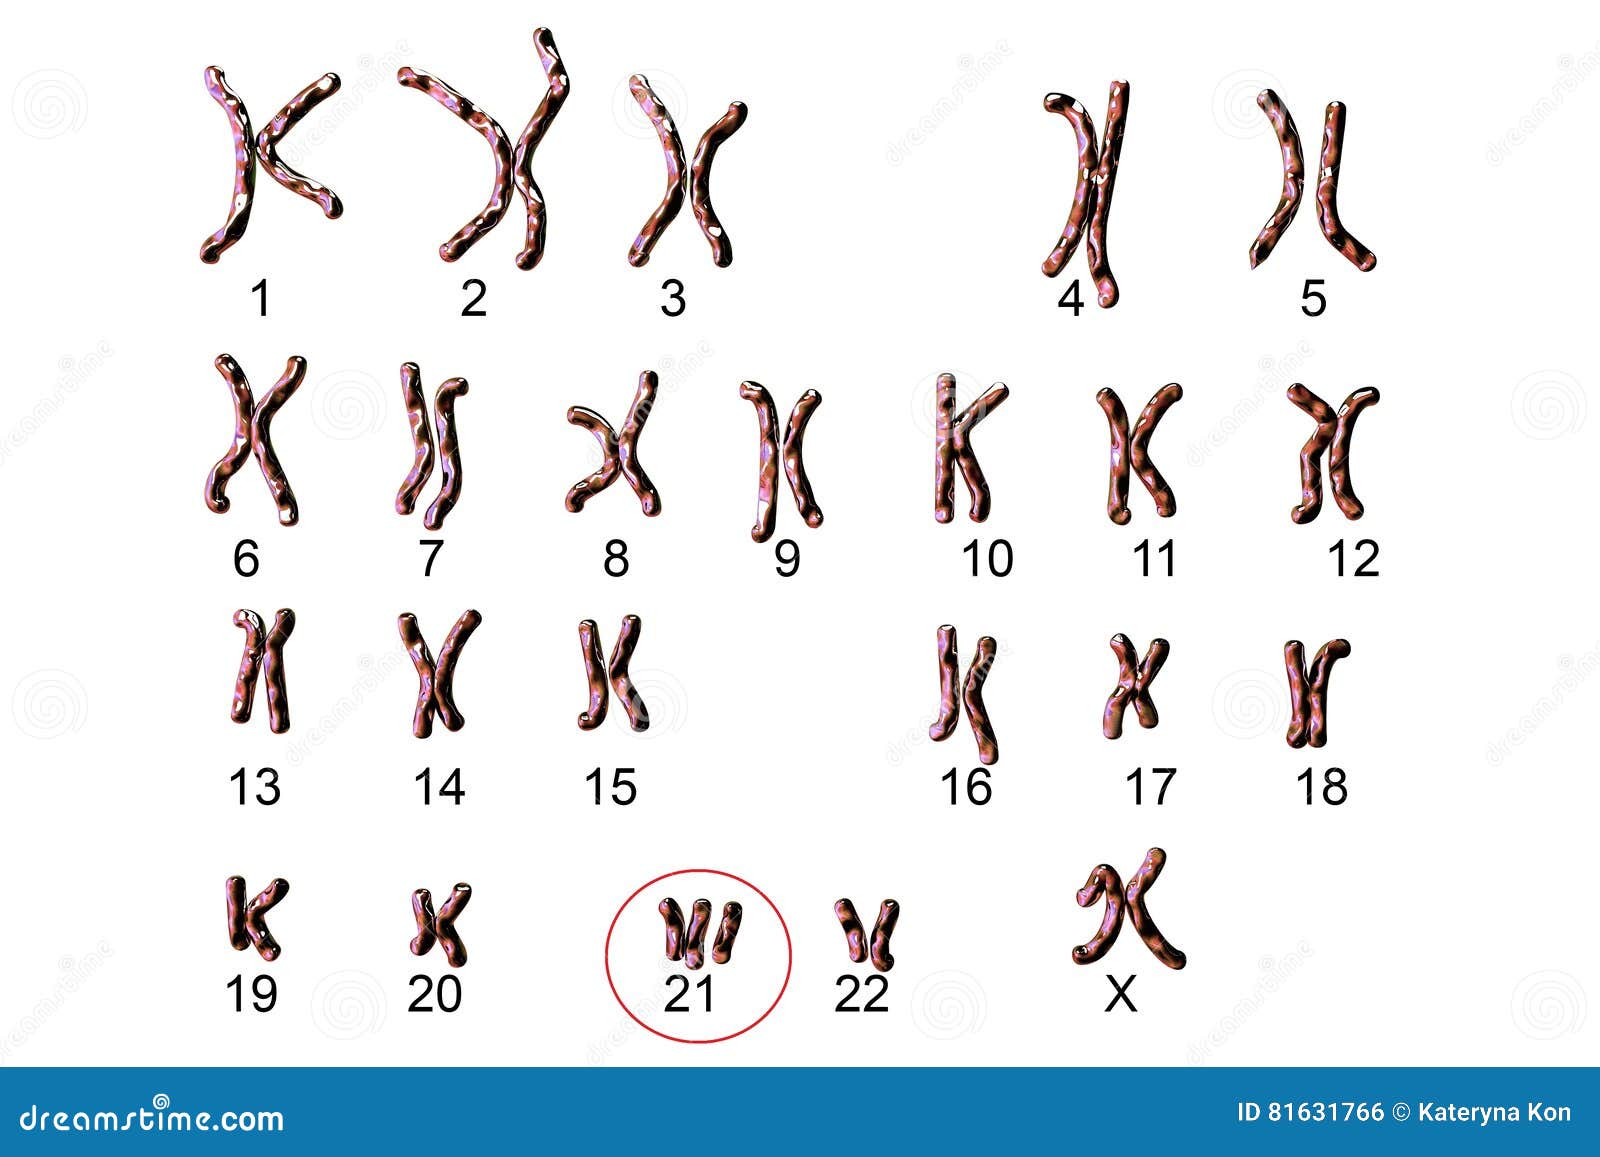 Nondisjunction and chromosomal anomalies